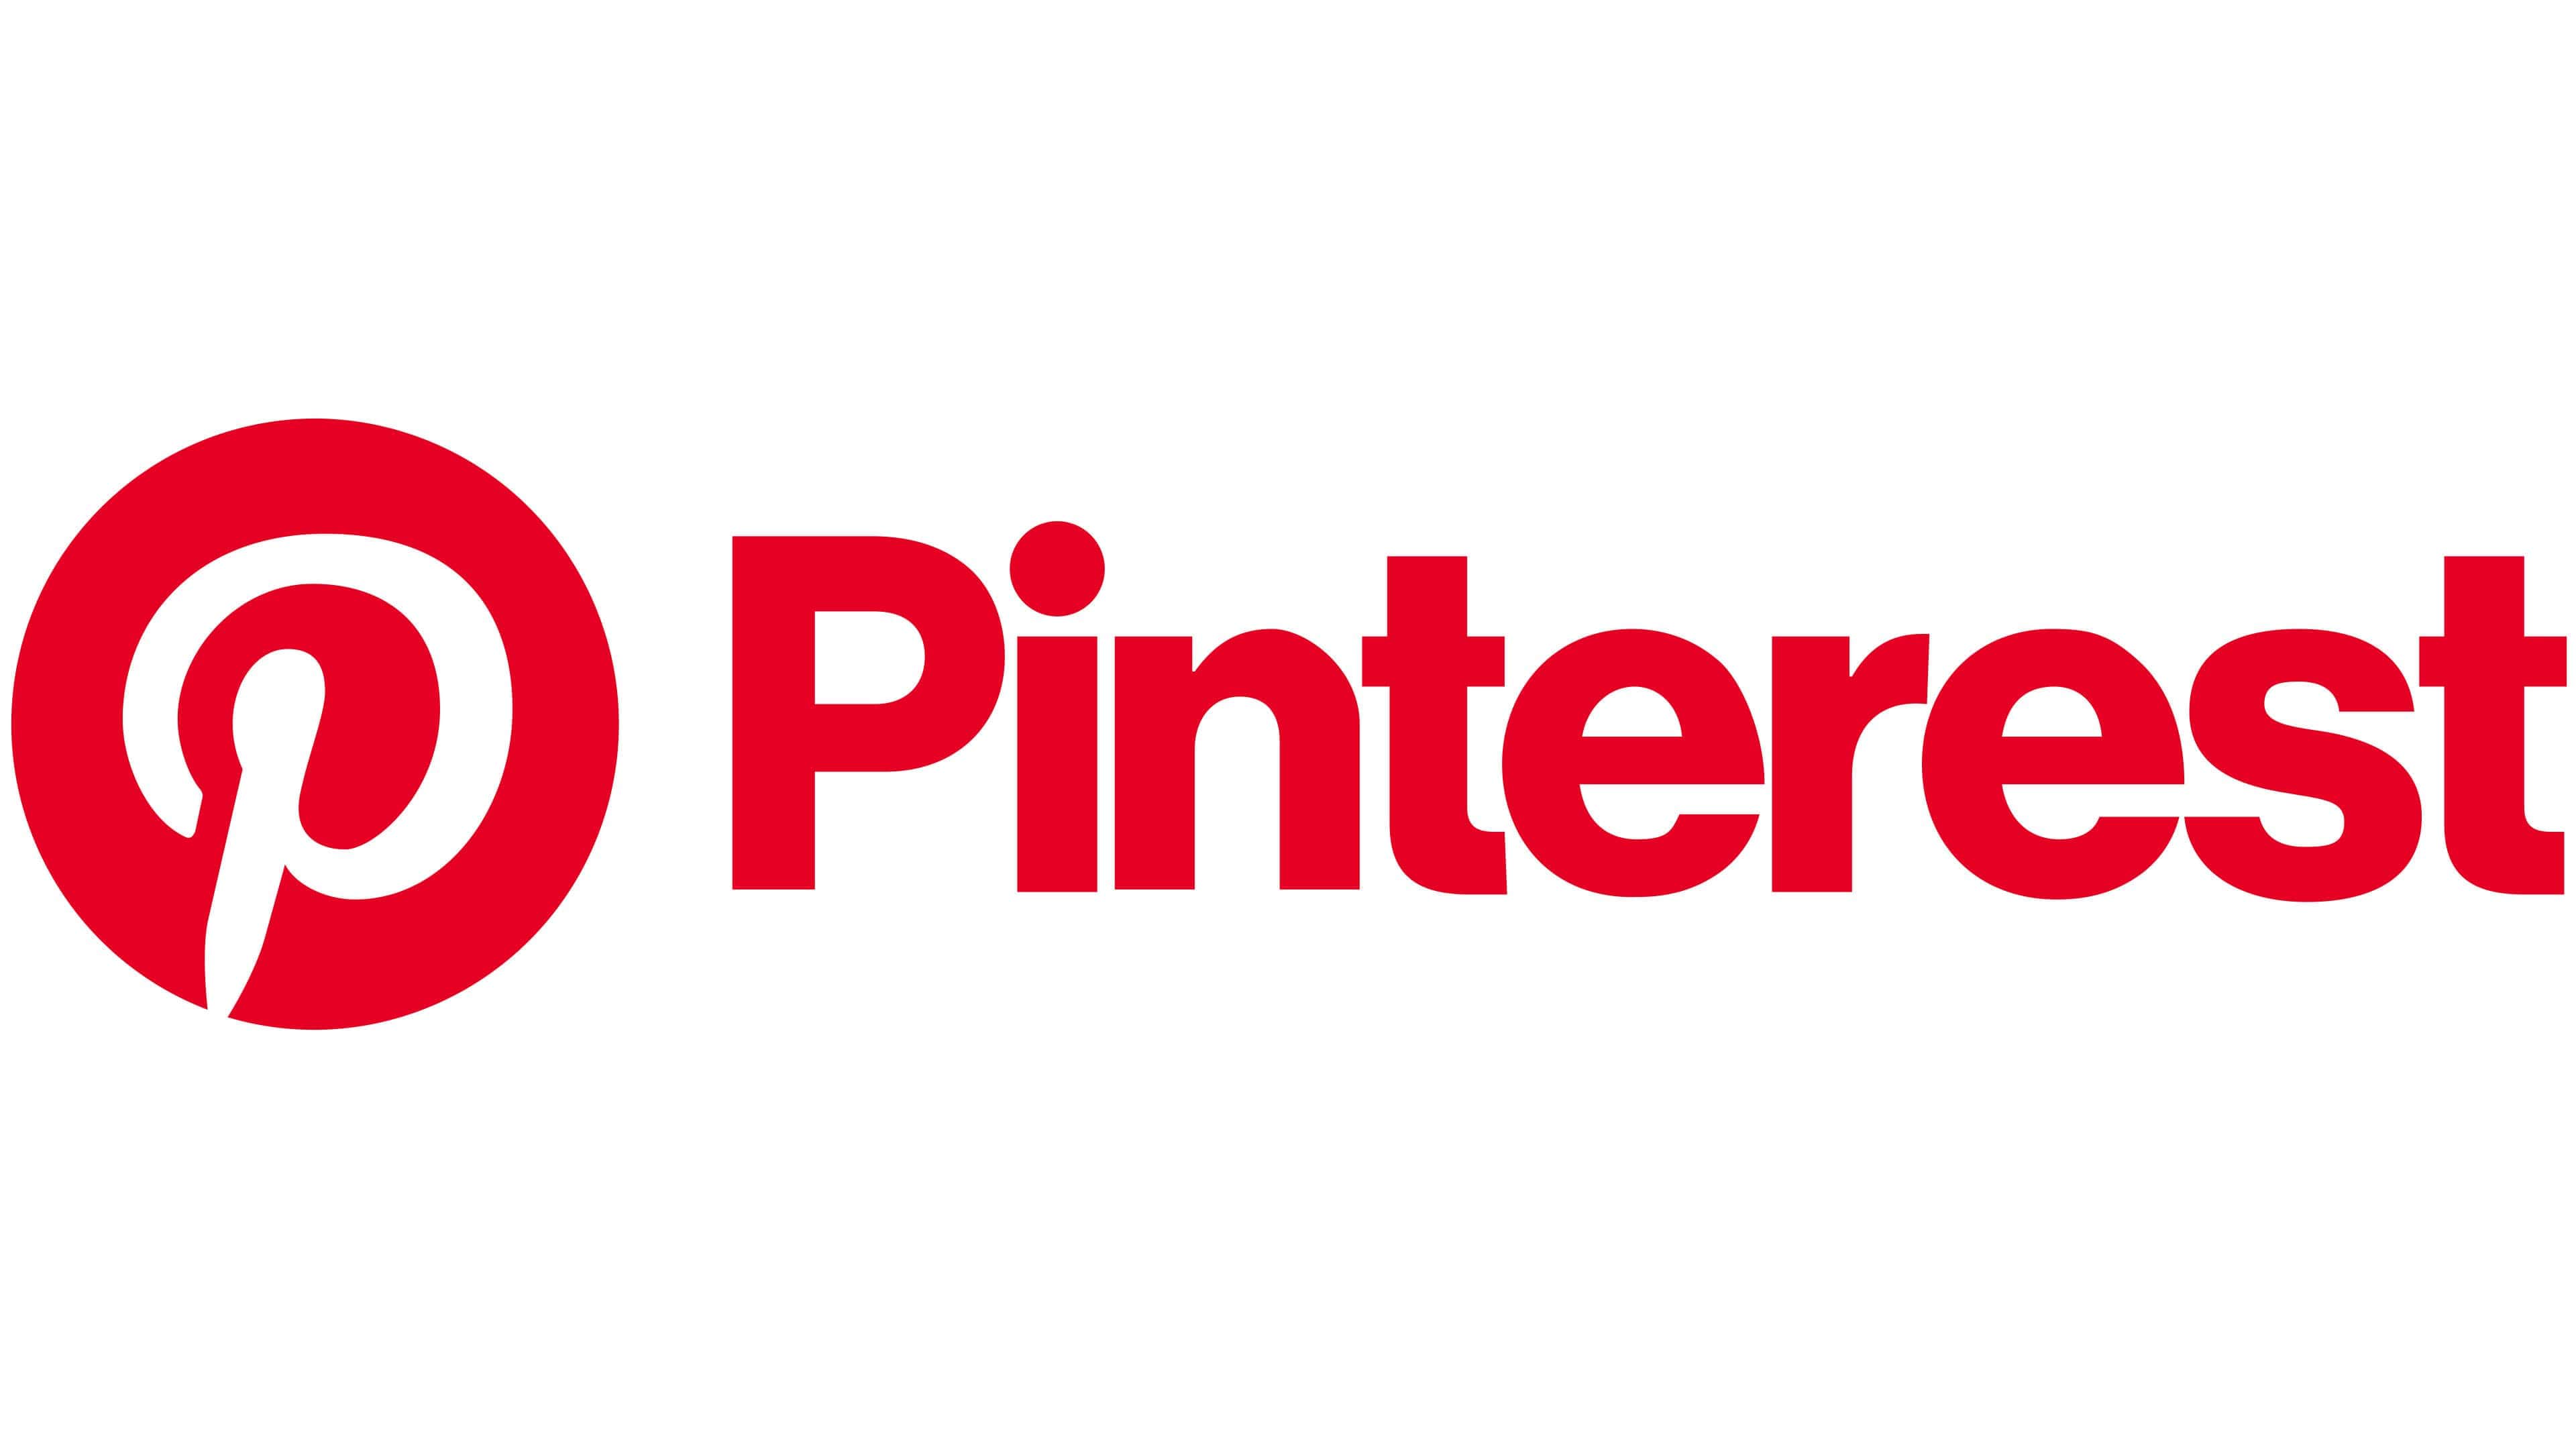 https://logos-world.net/wp-content/uploads/2020/09/Pinterest-Logo-2016-present.jpg